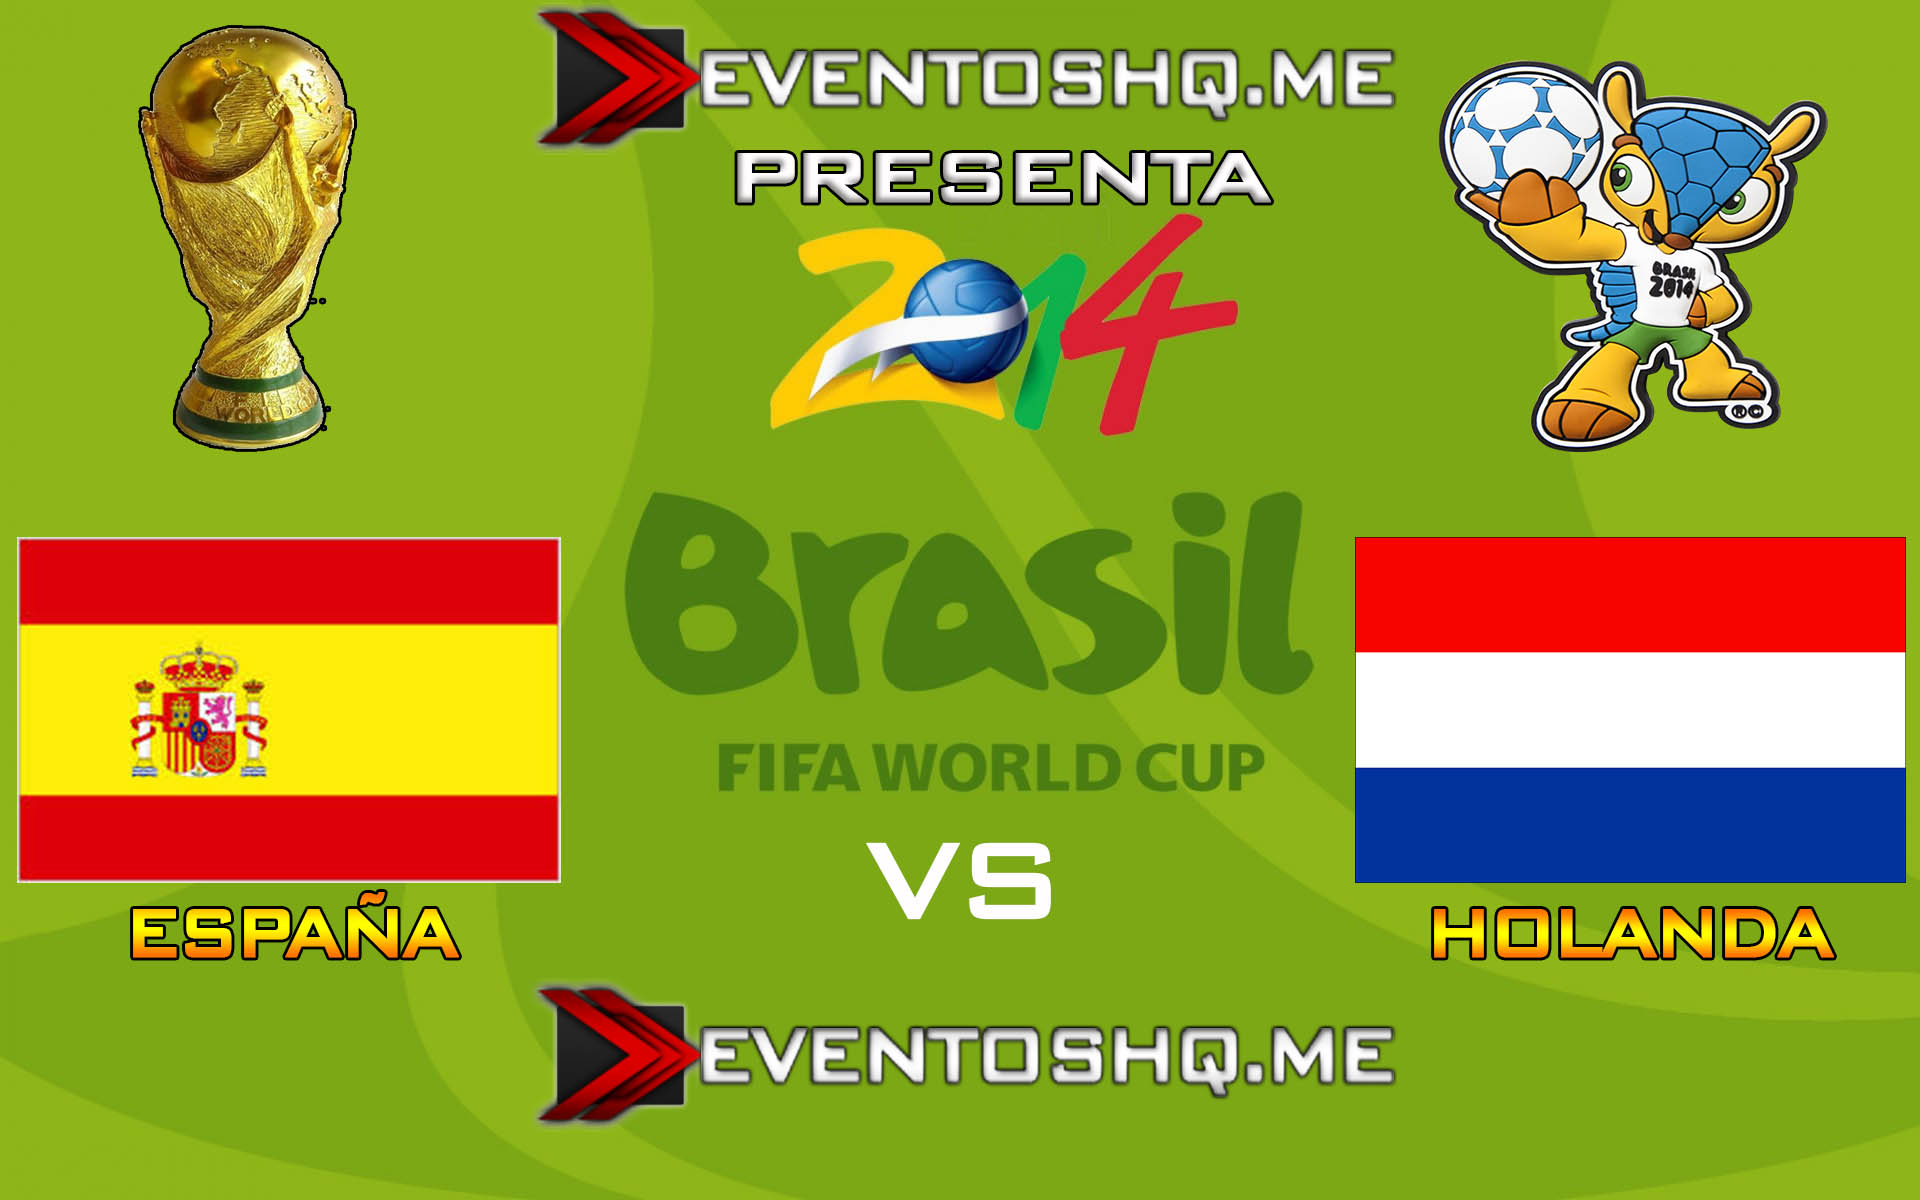 Ver en Vivo España vs Holanda Mundial Brasil 2014 www.eventoshq.me